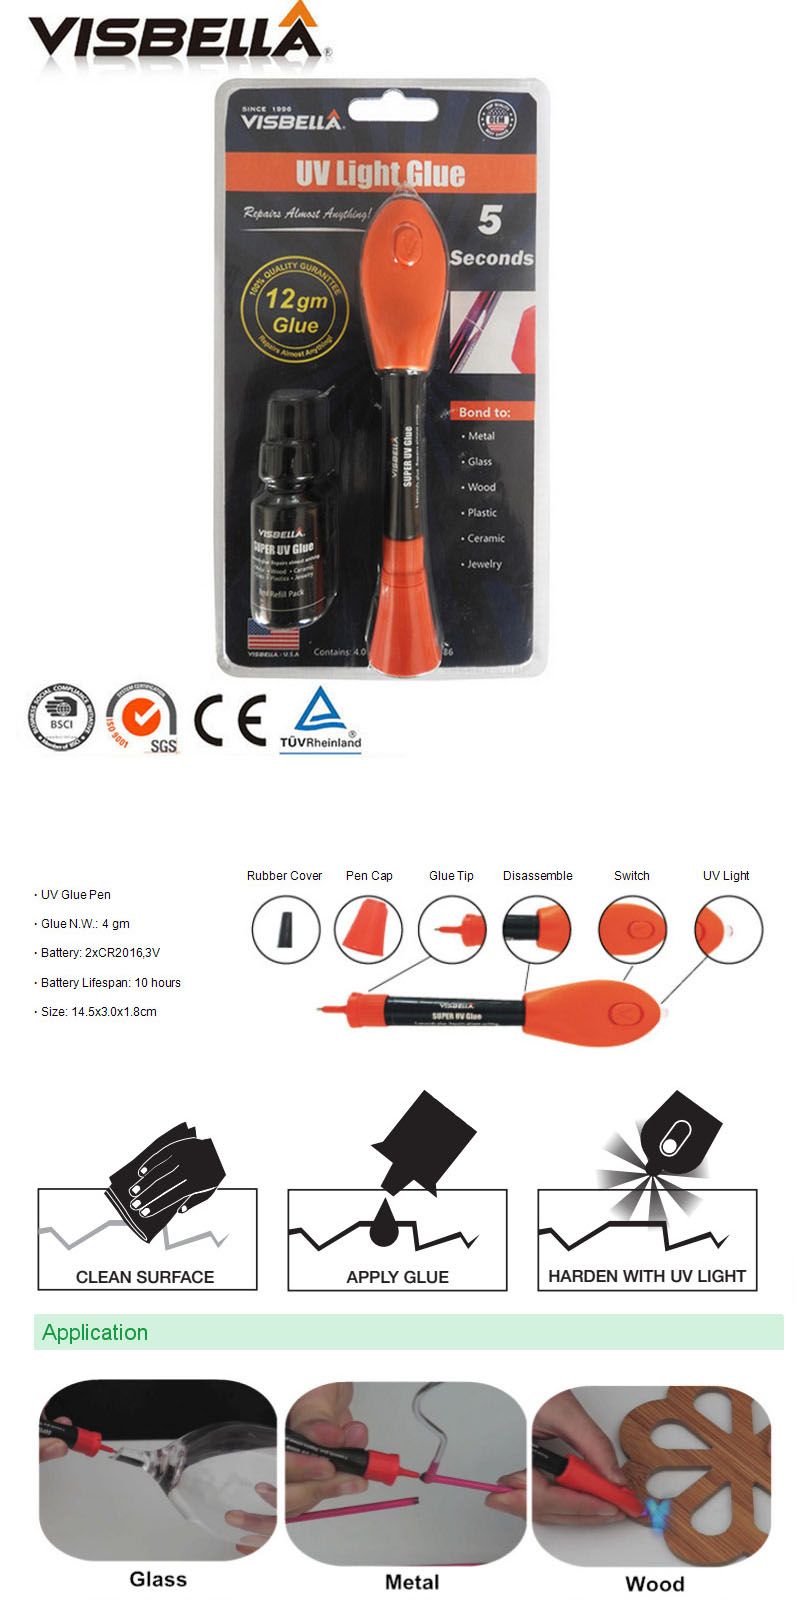 Visbella-Universal-5-Seconds-Fix-UV-Light-Glue-Plastic-Welding-Glue-Quickly-Seal-and-Repair-with-8g--1225377-1